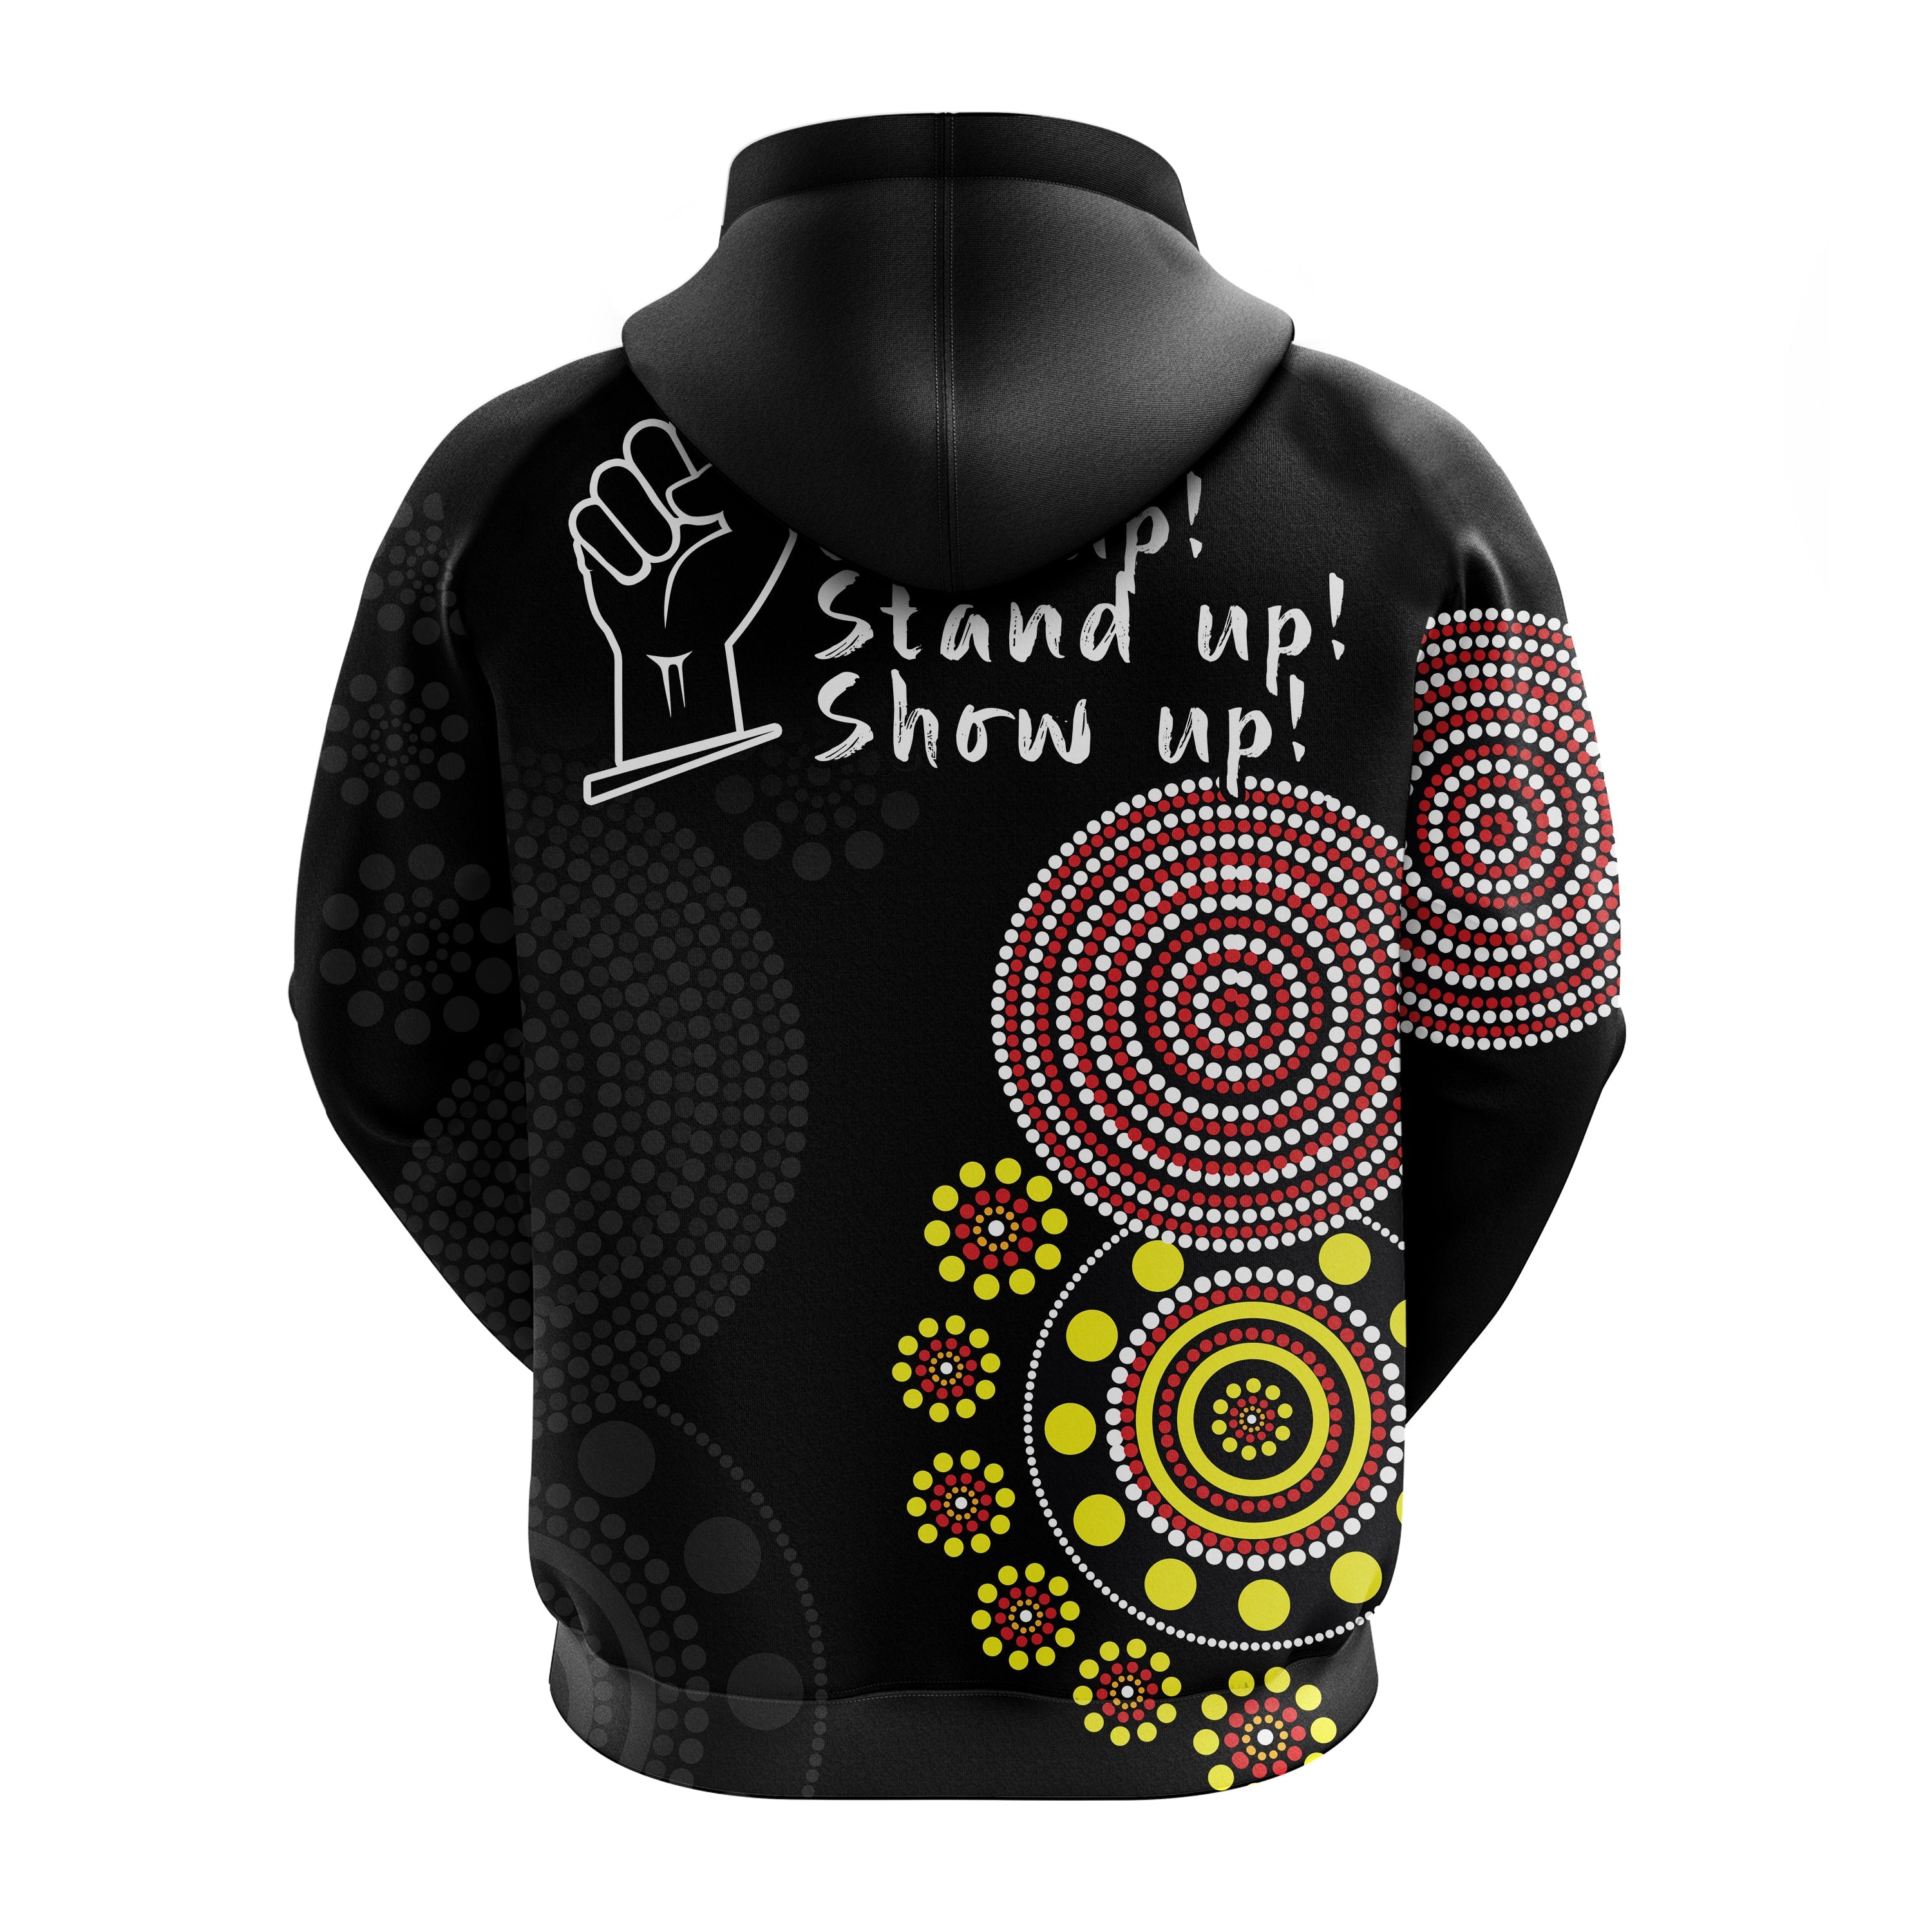 naidoc-week-2022-hoodie-version-aboriginal-dot-get-up